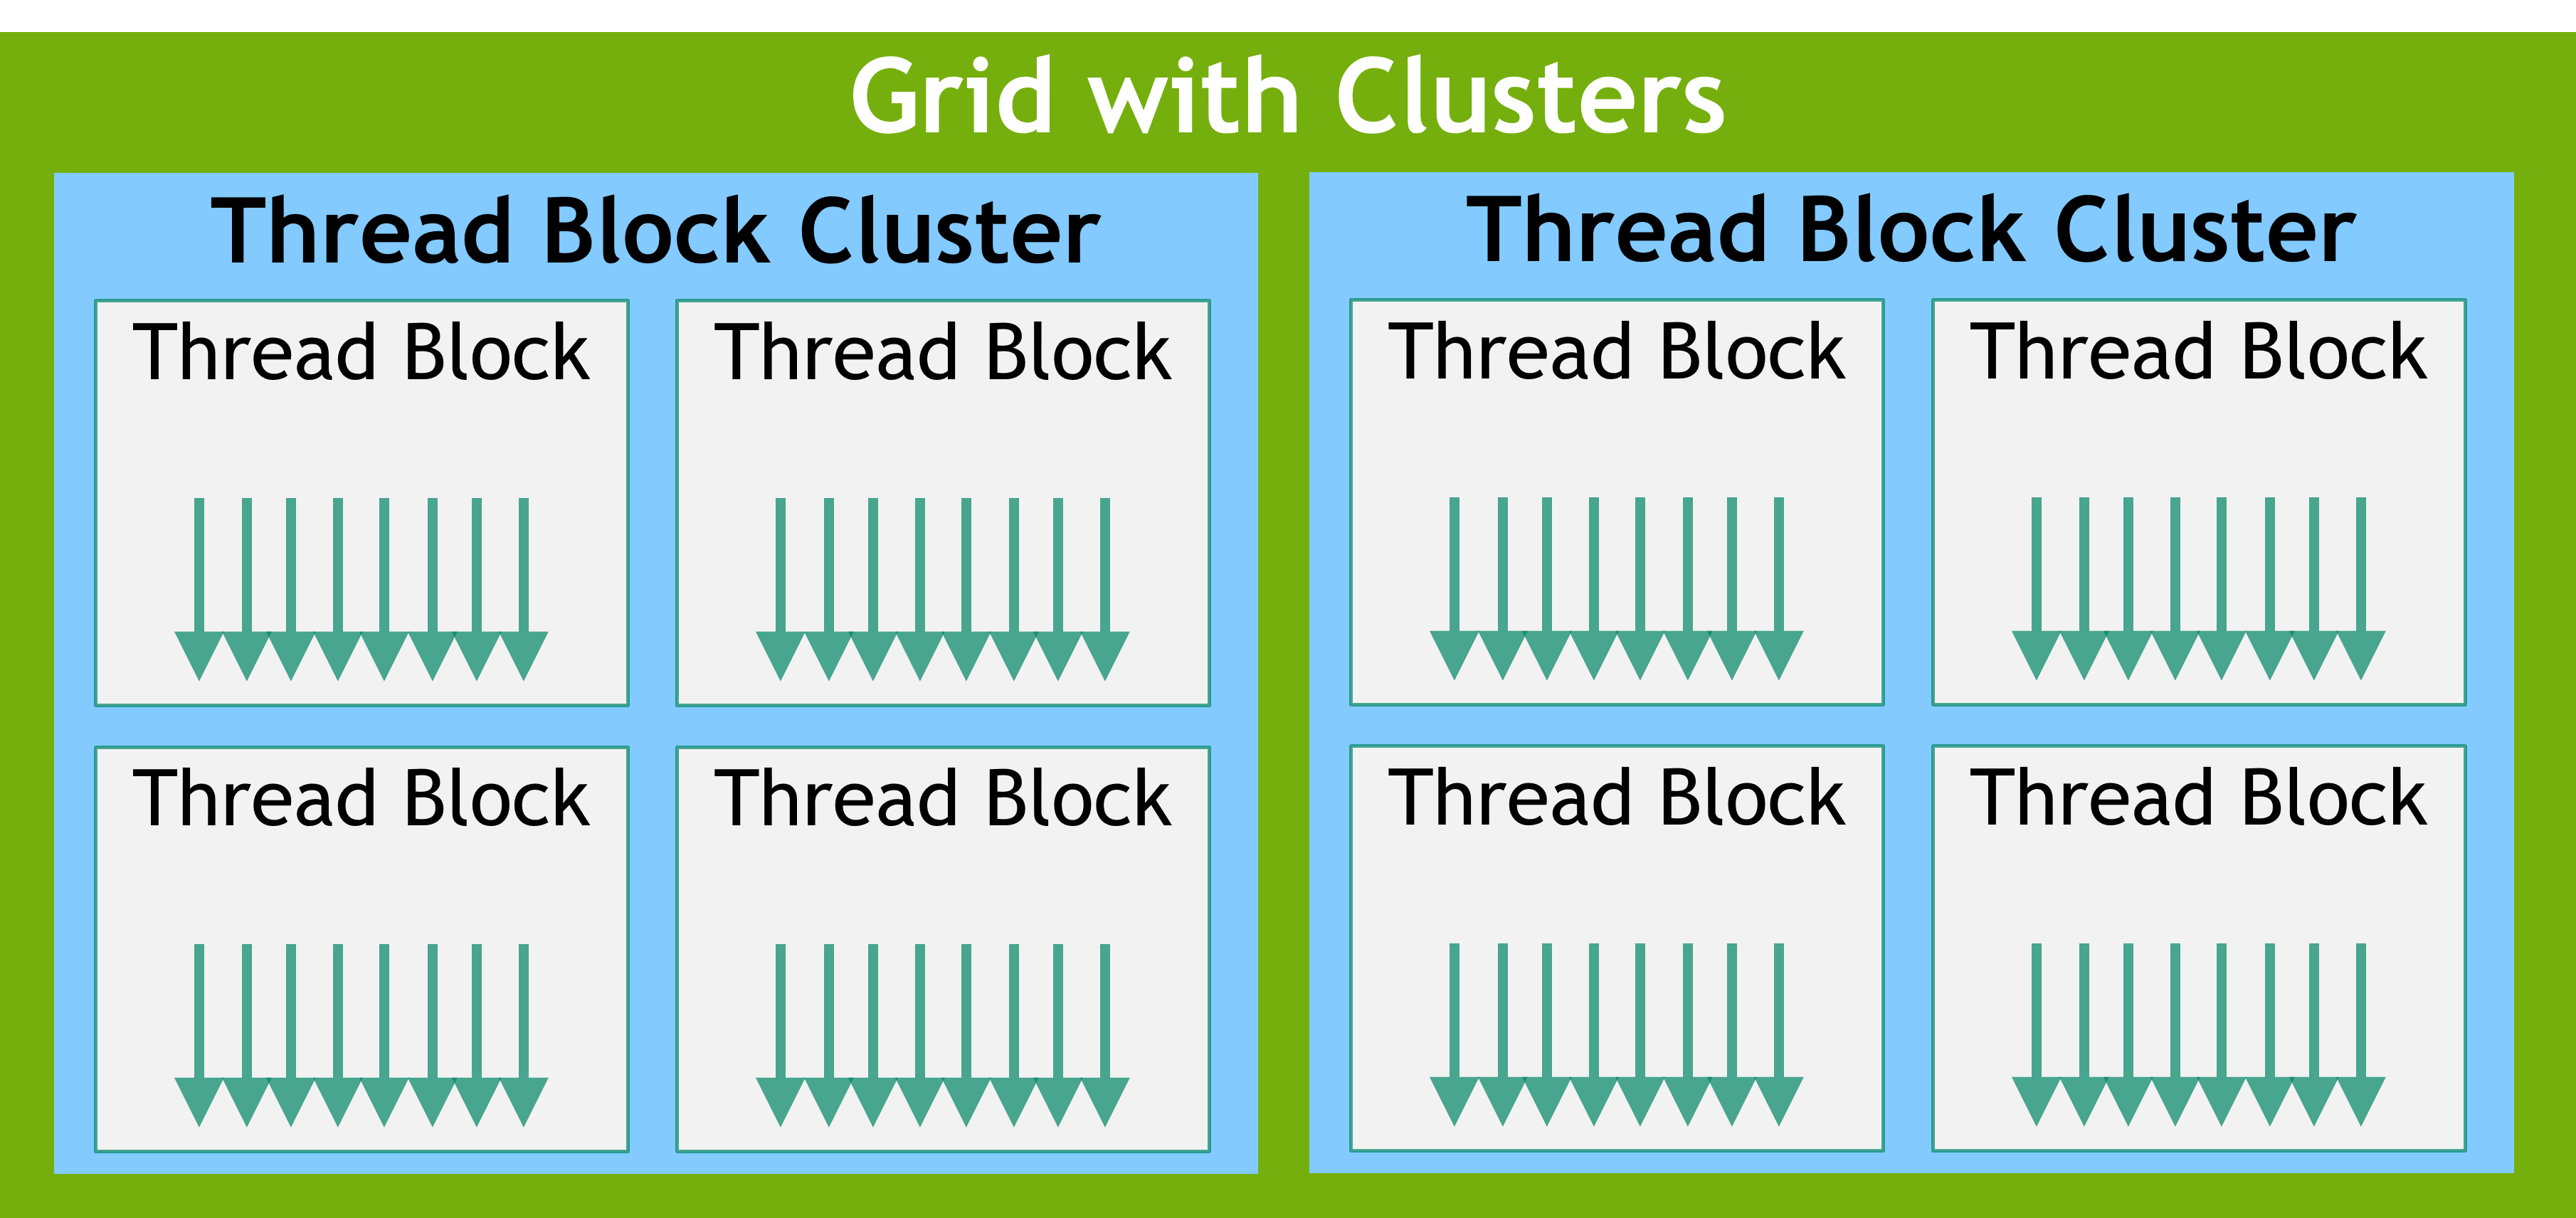 Grid of Thread Block Clusters.